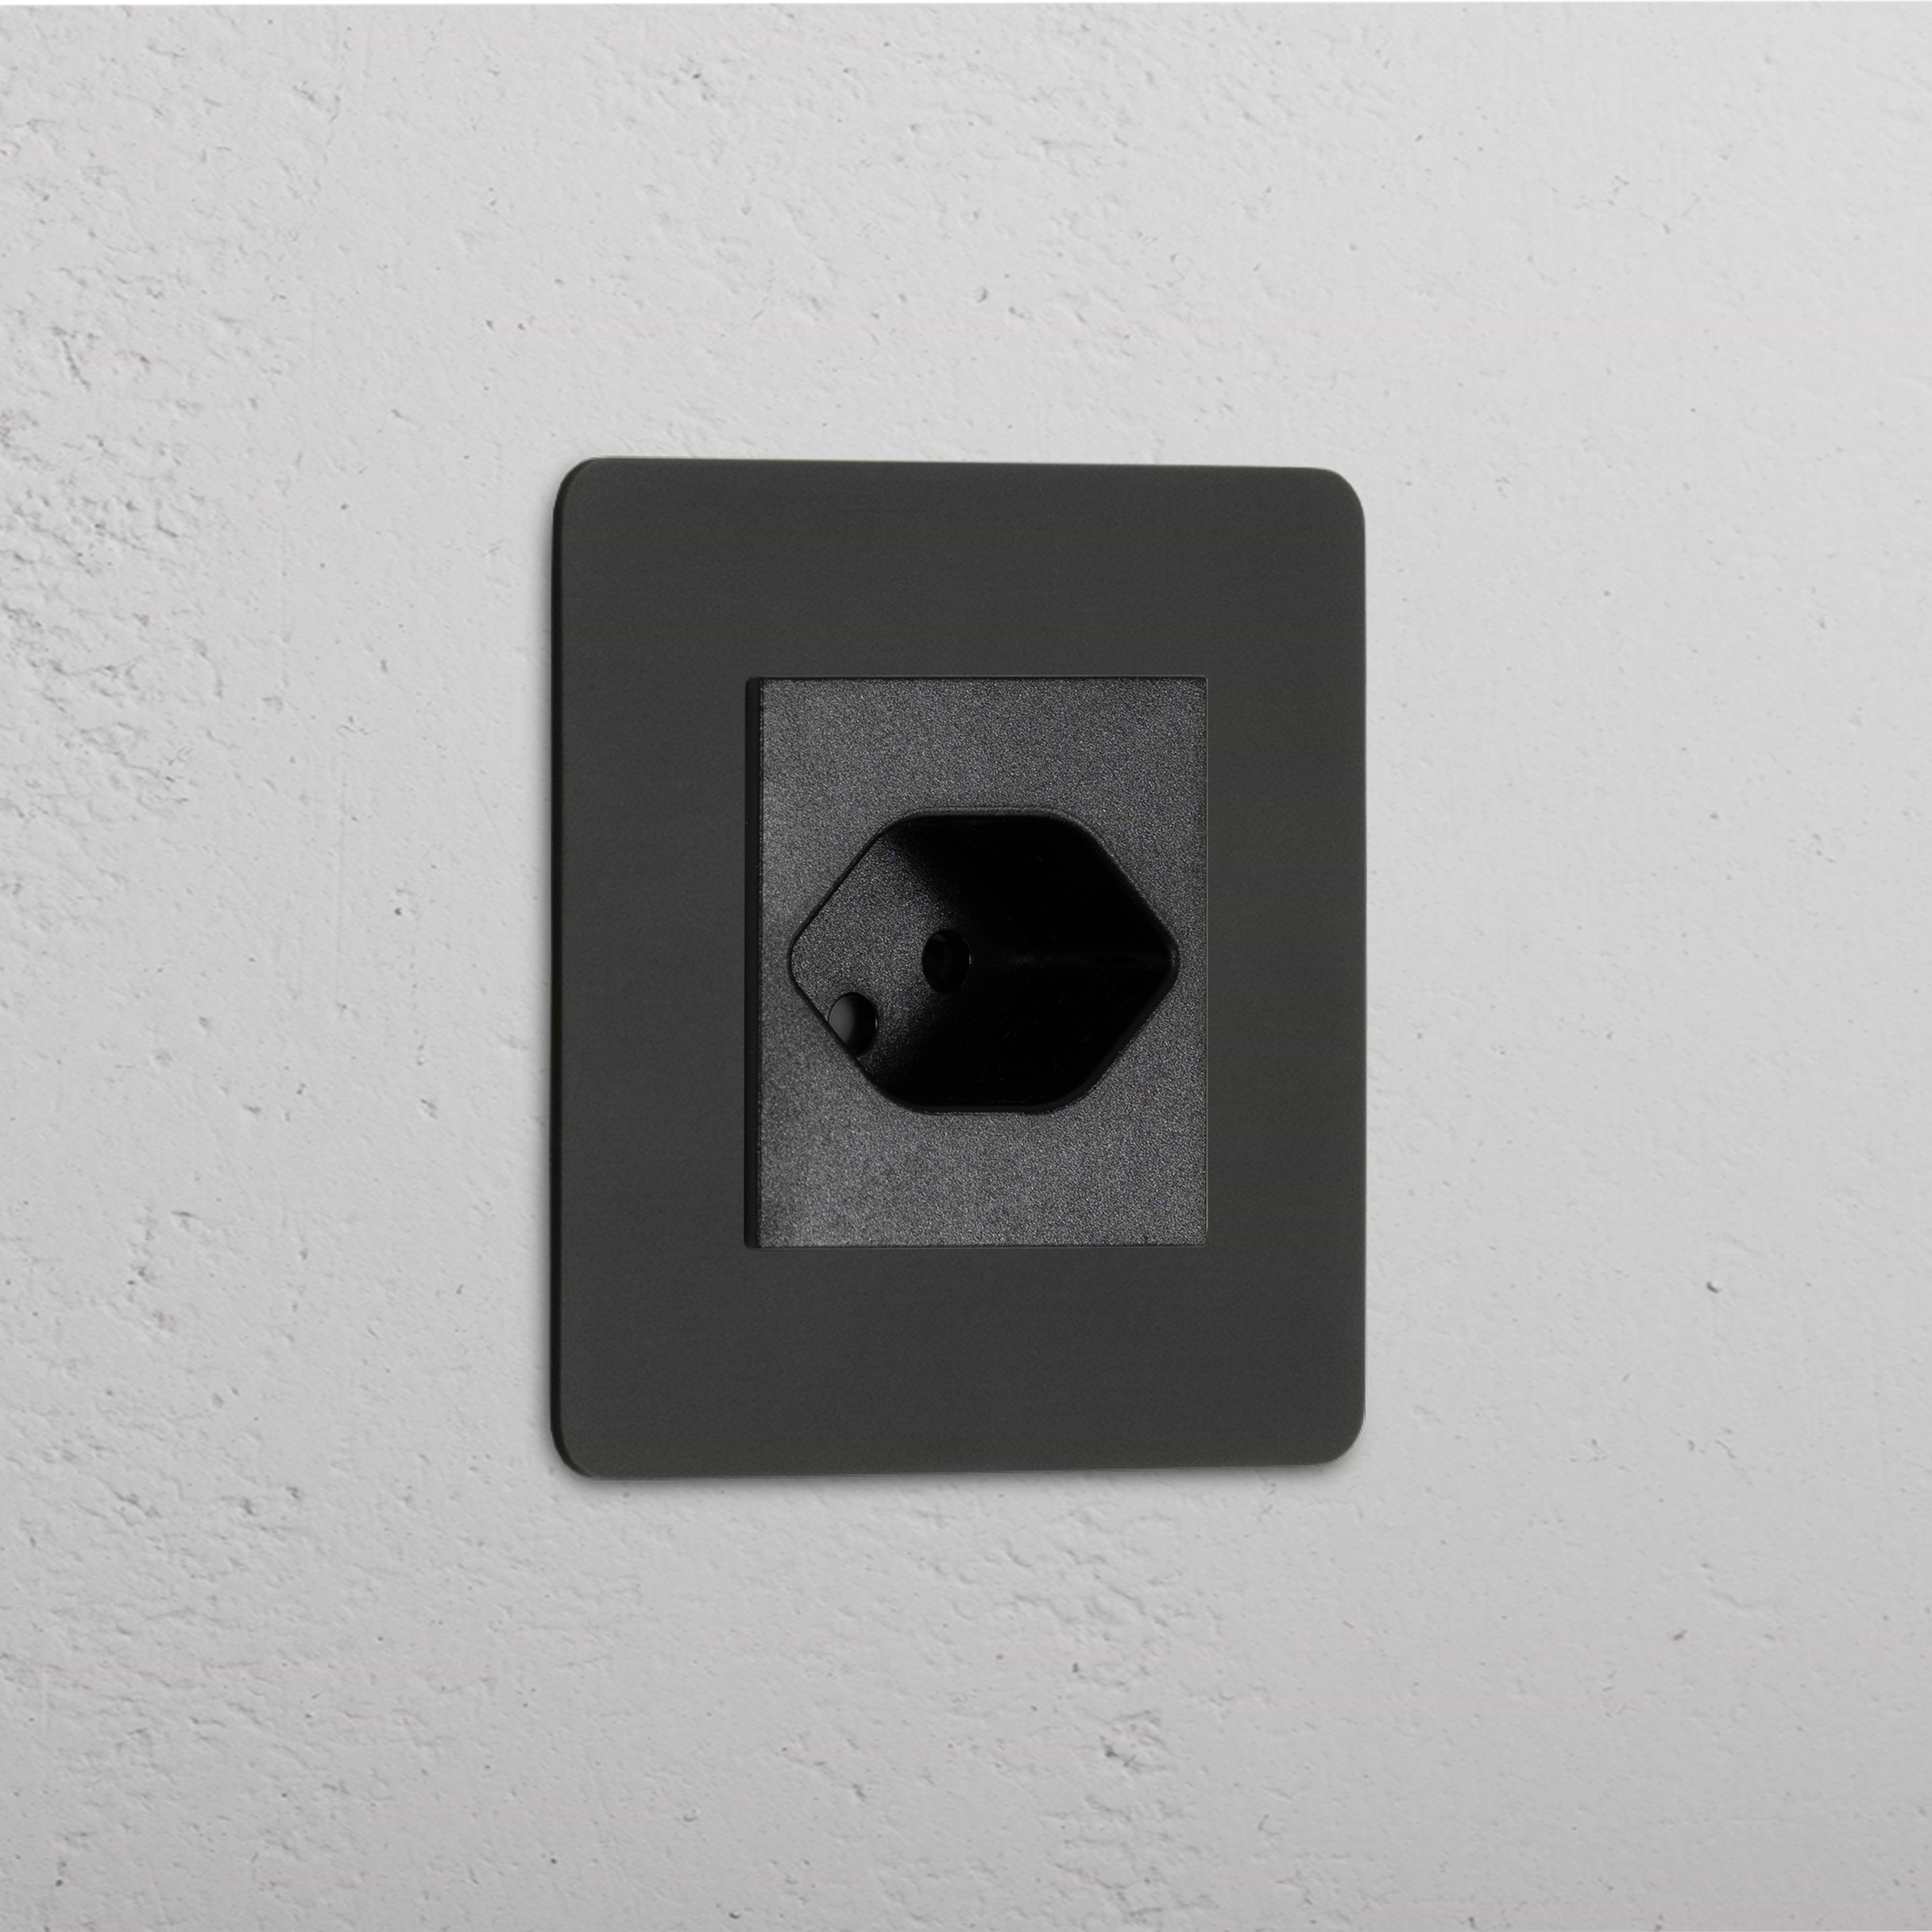 Single Swiss Module - Bronze Black Finish on White Background